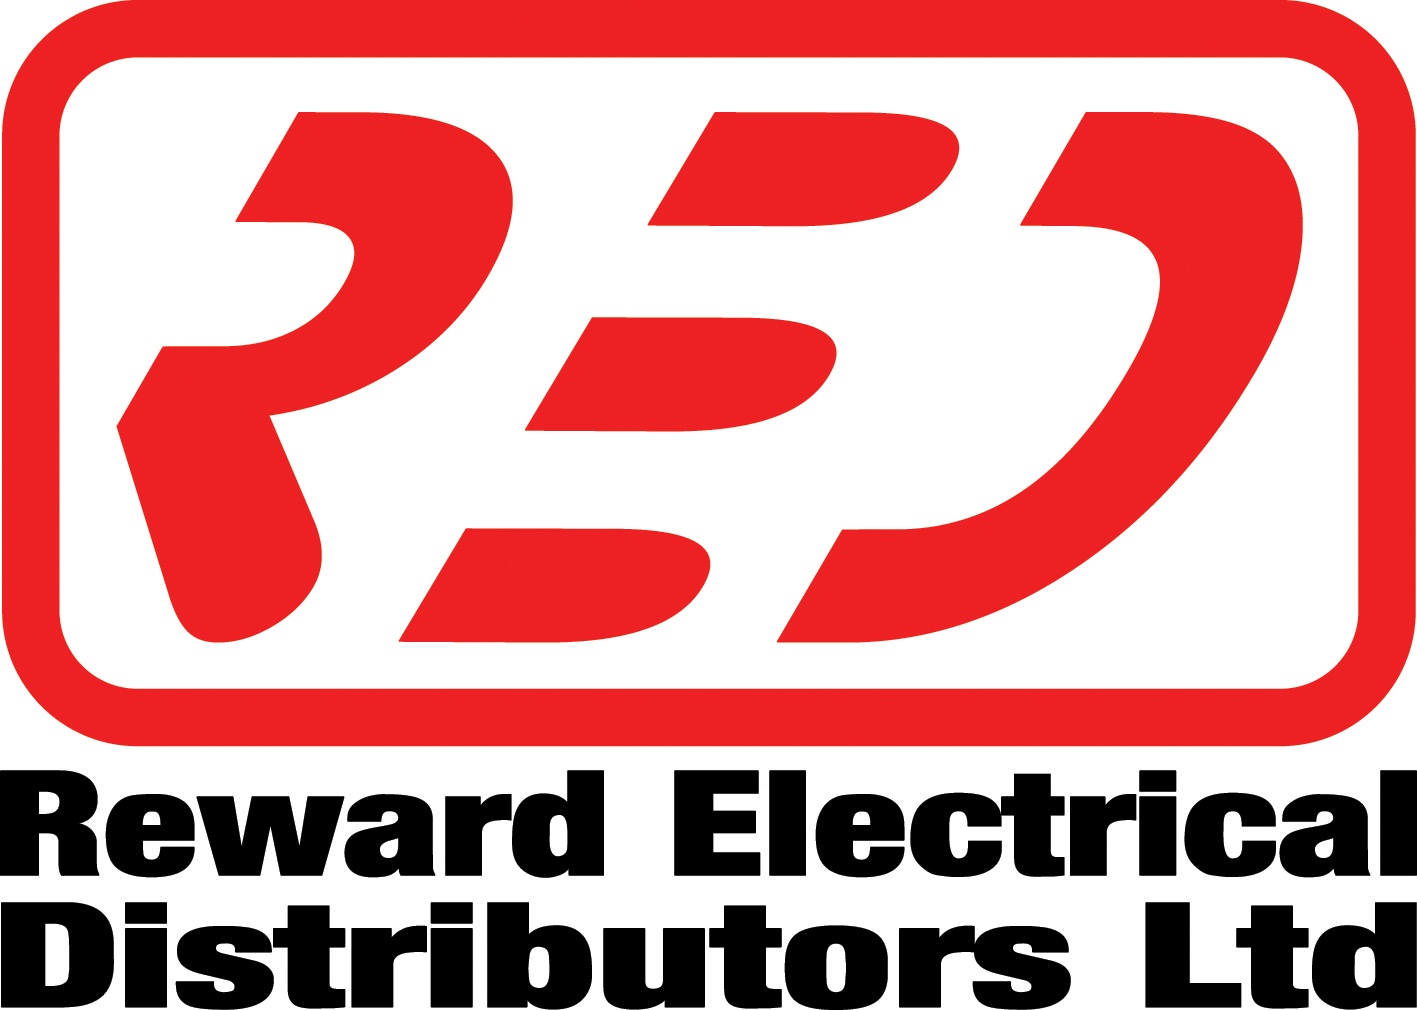 Reward Electrical Distributors Ltd